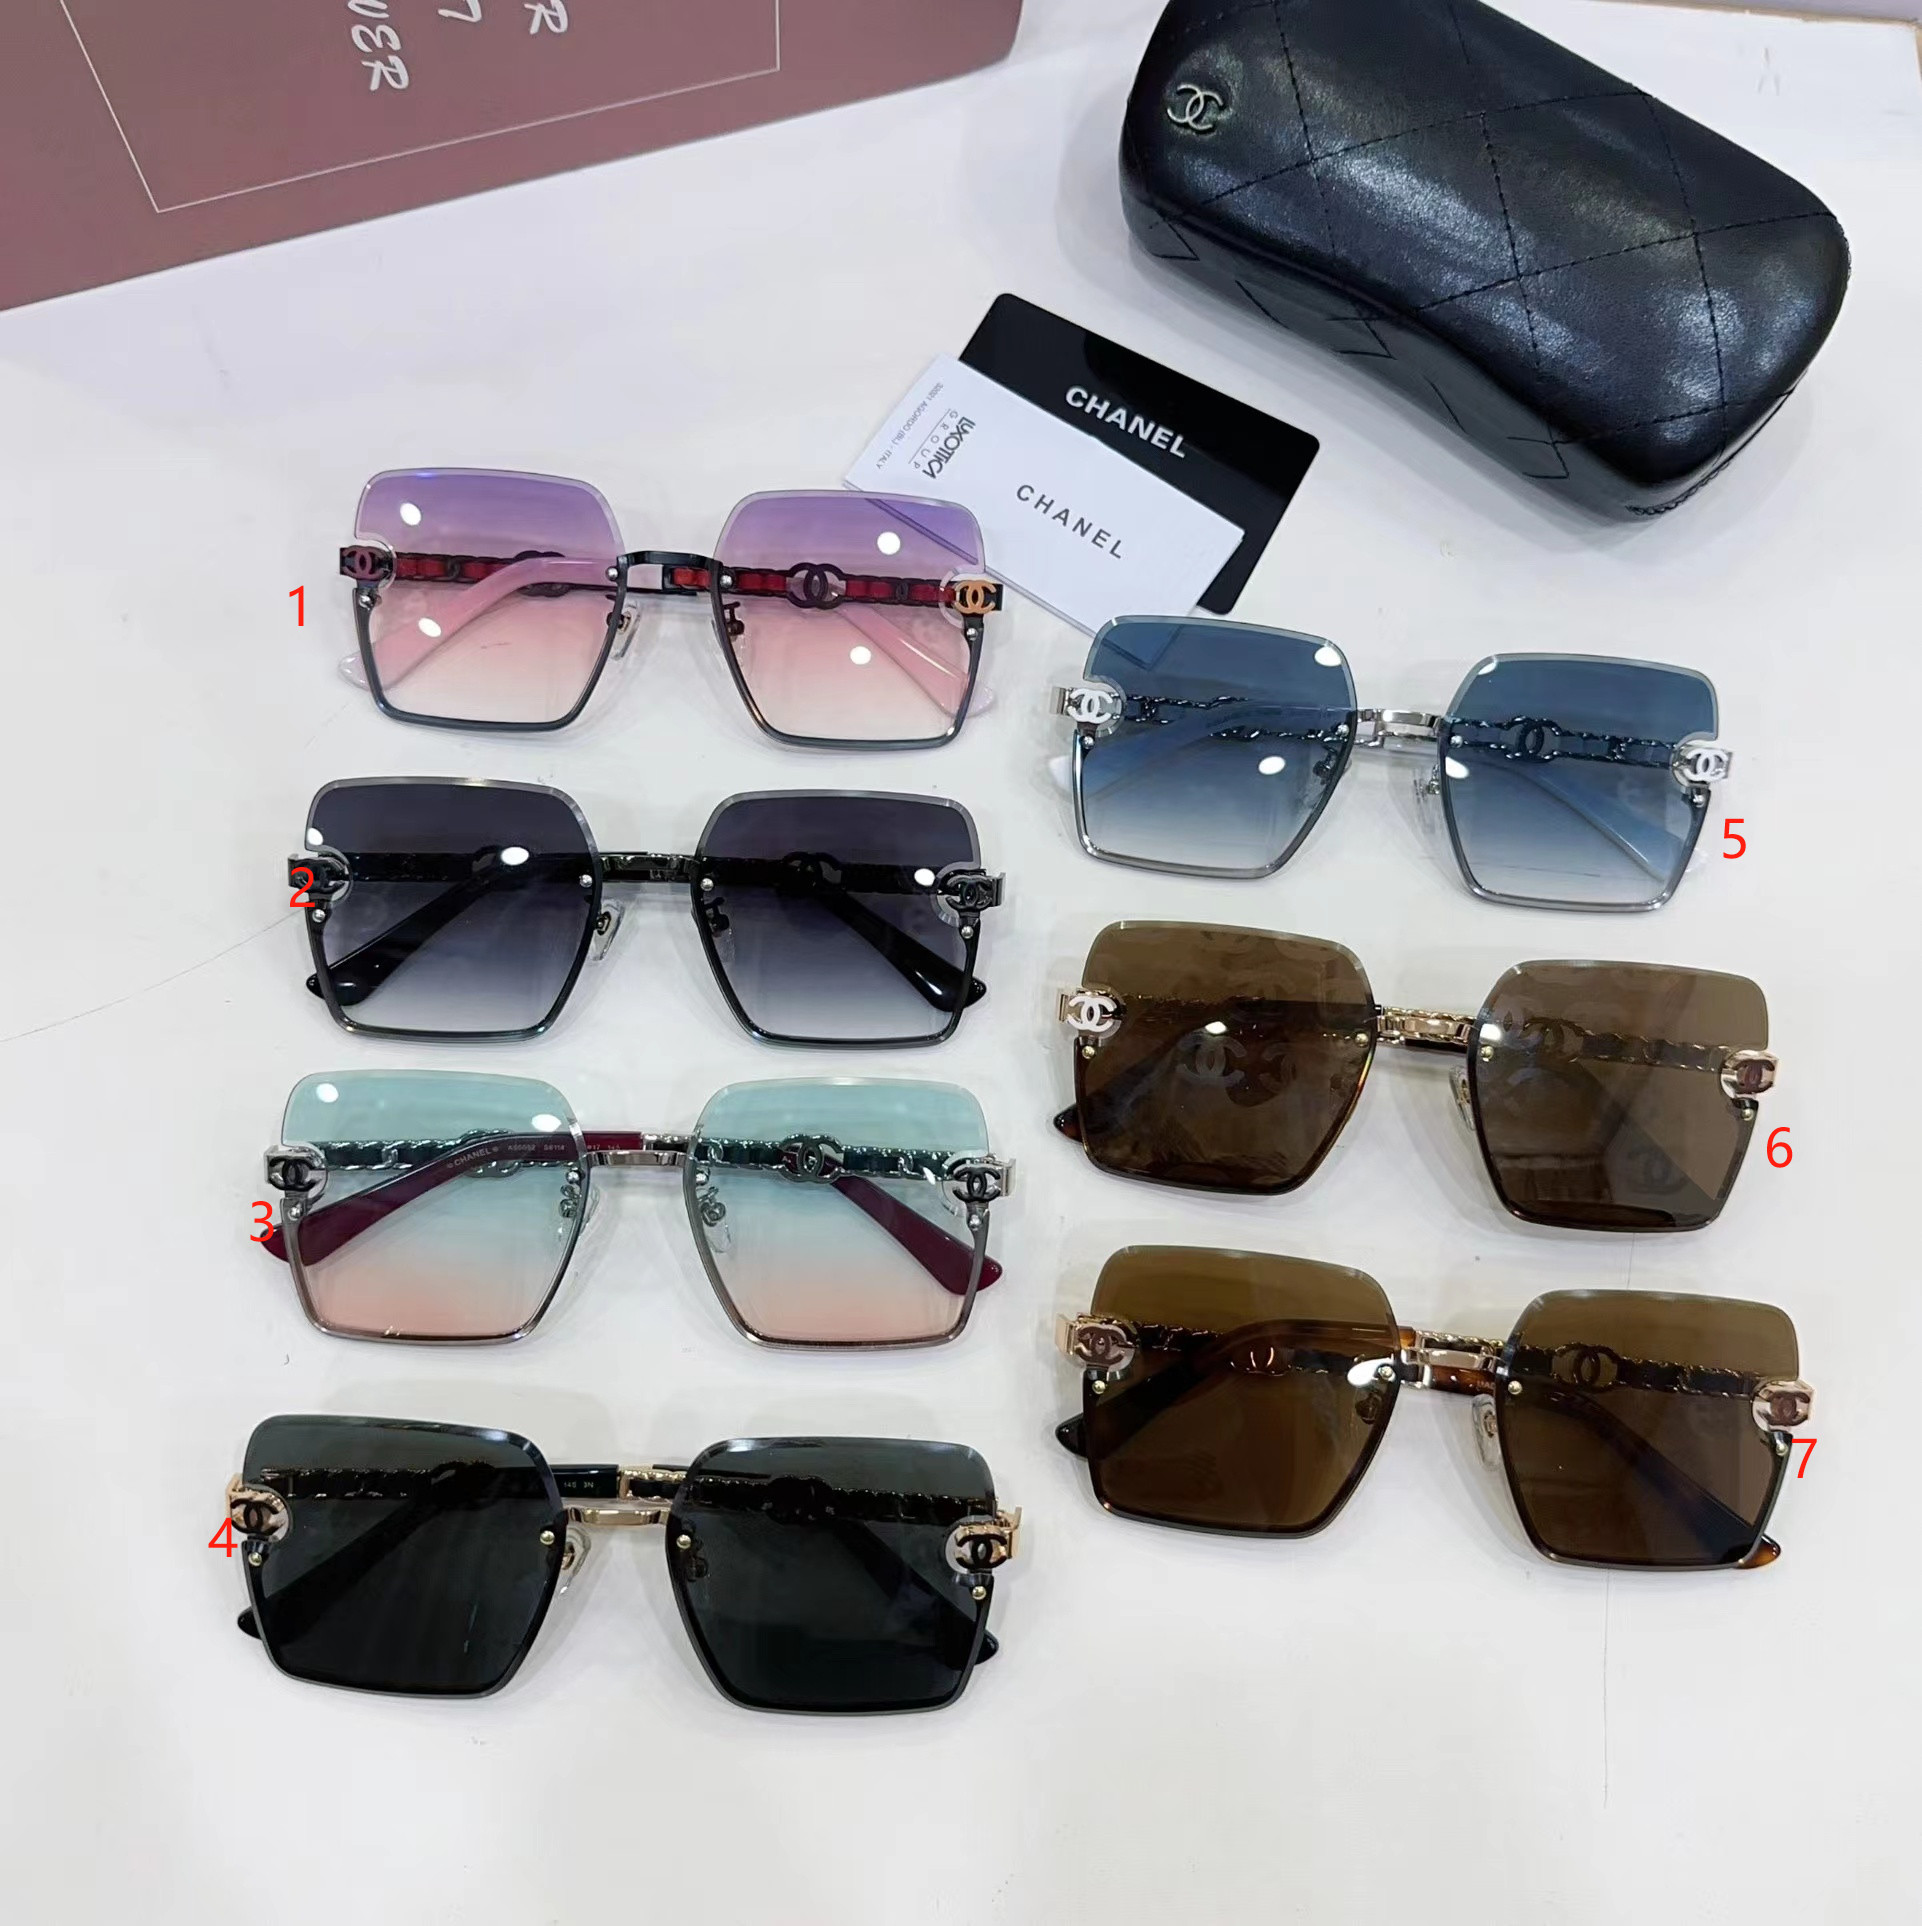 GRY 28 Chanel Sunglasses